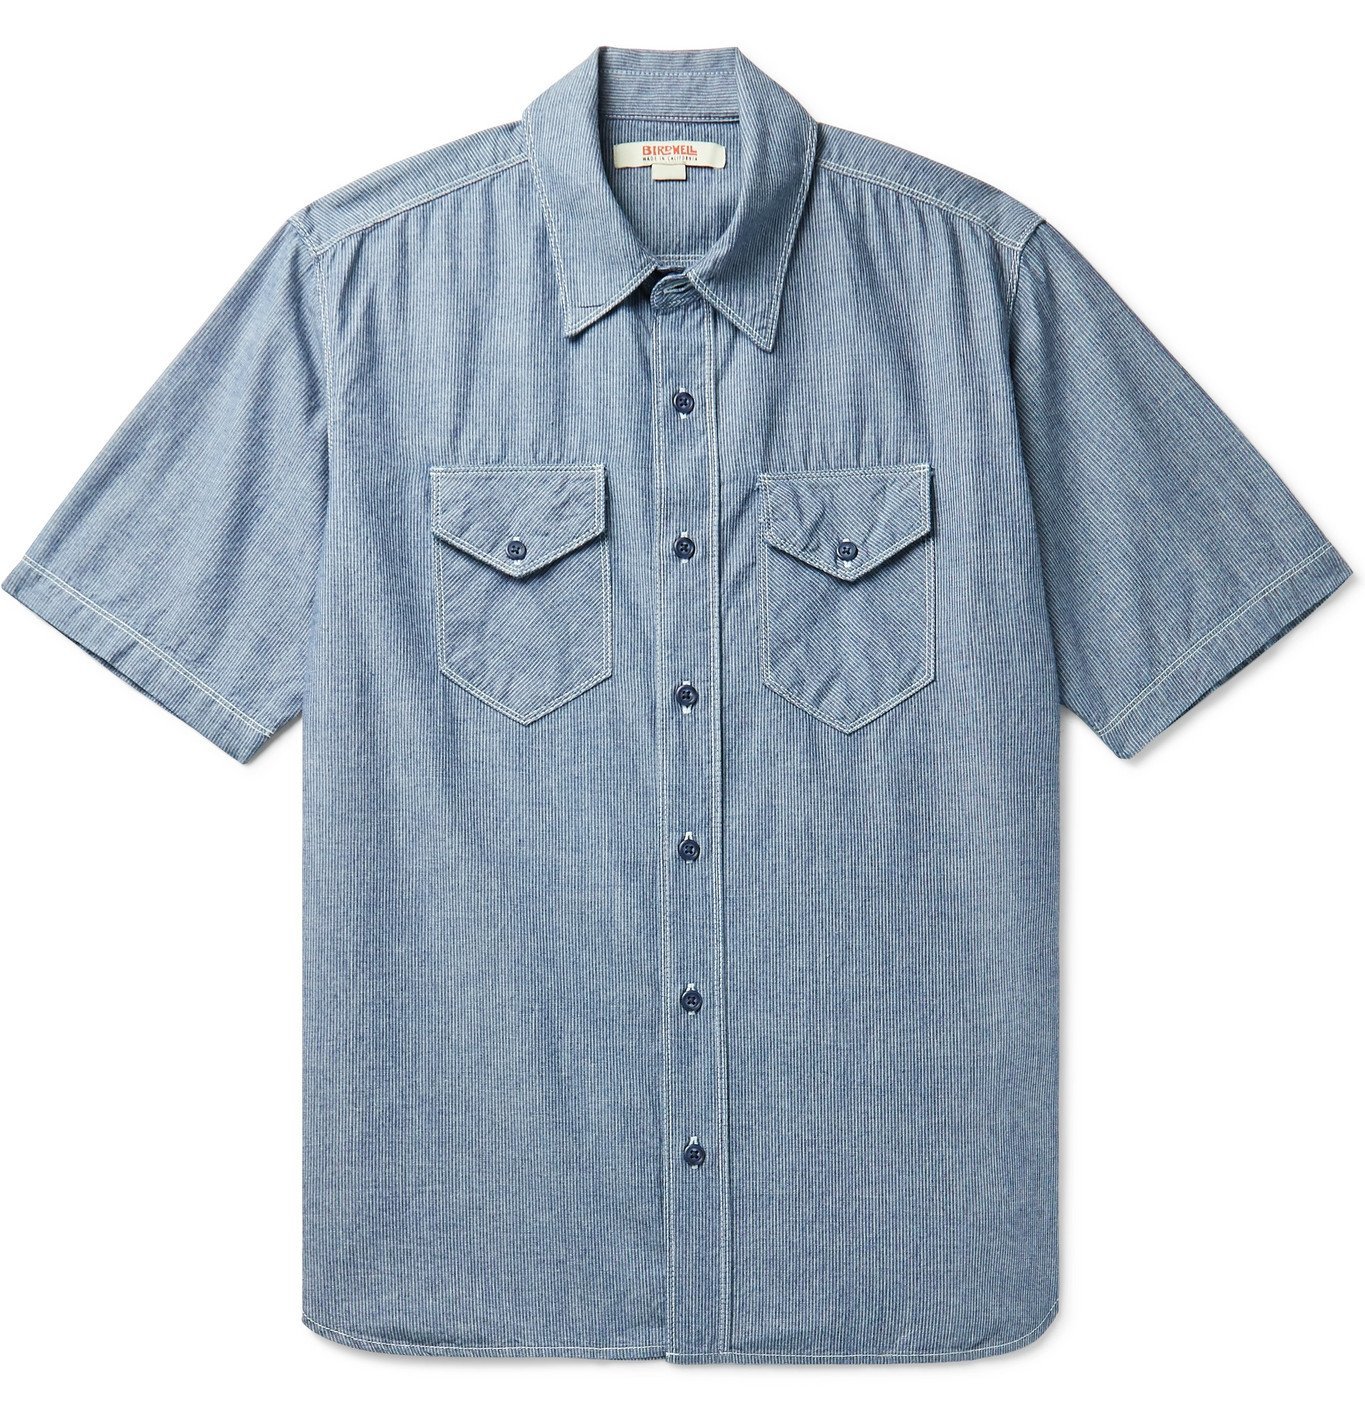 Birdwell - Pinstriped Cotton-Chambray Shirt - Blue Birdwell